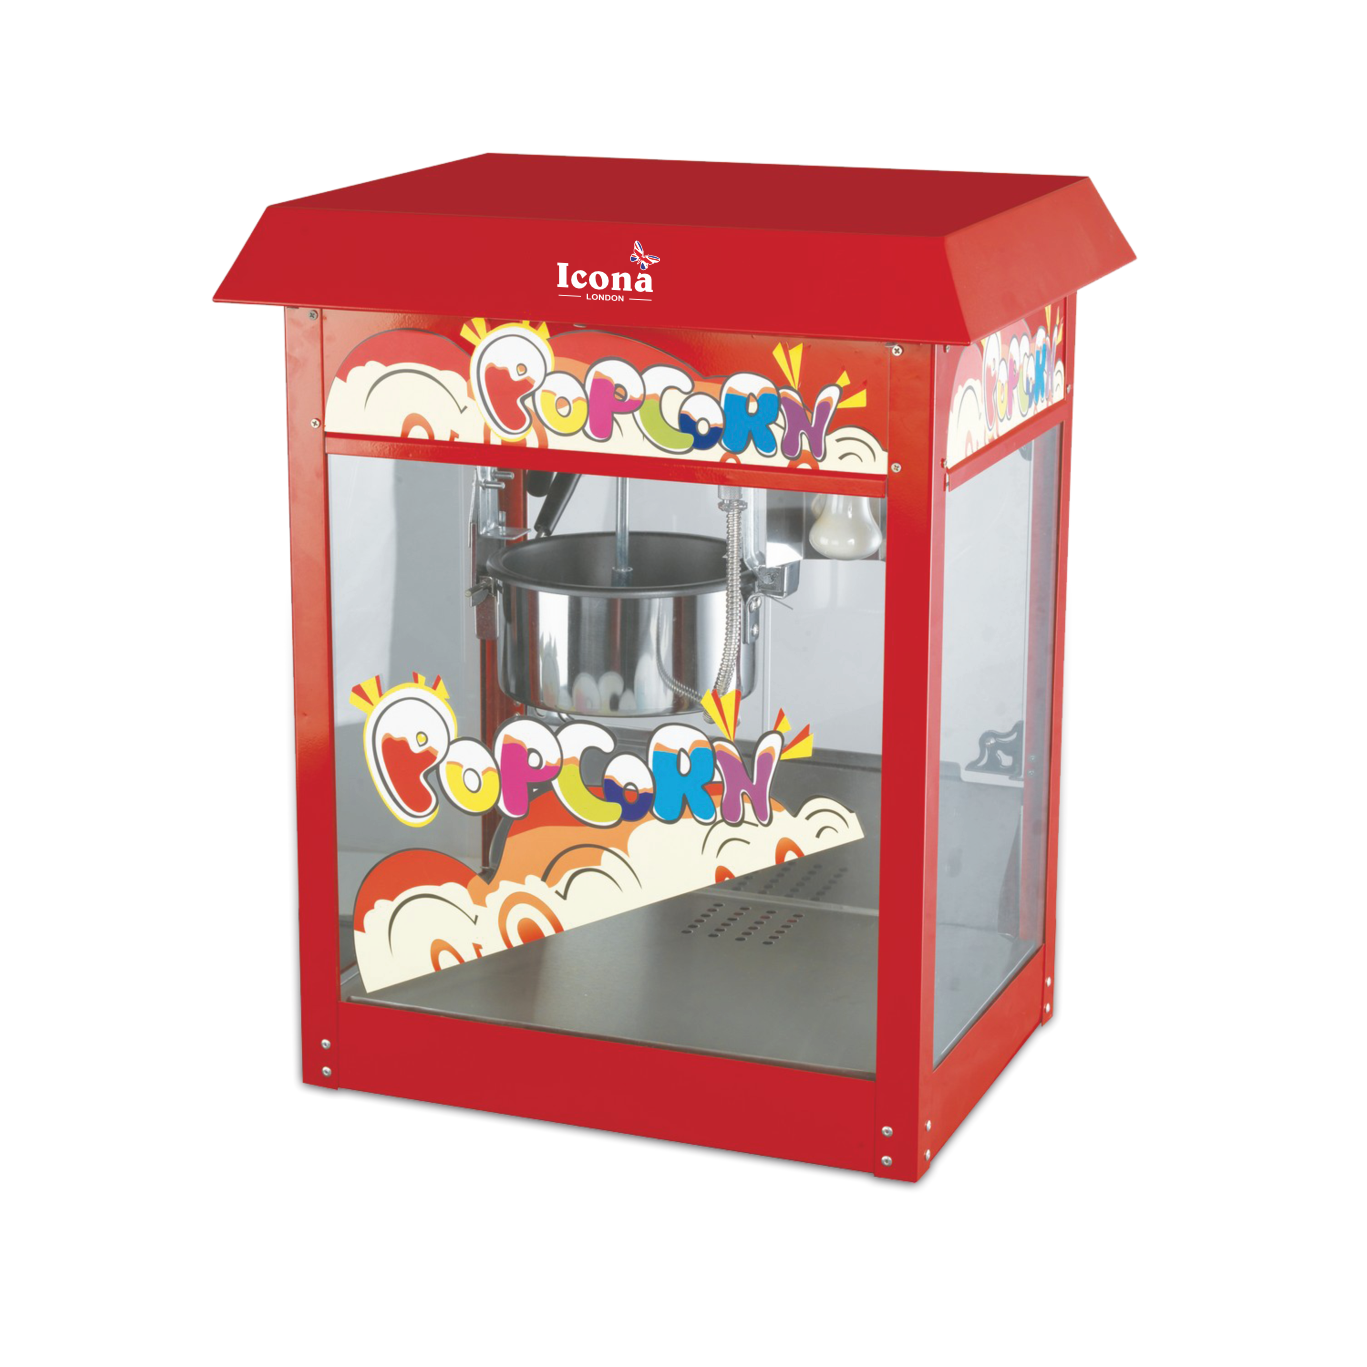 Icona London's Popcorn Machine